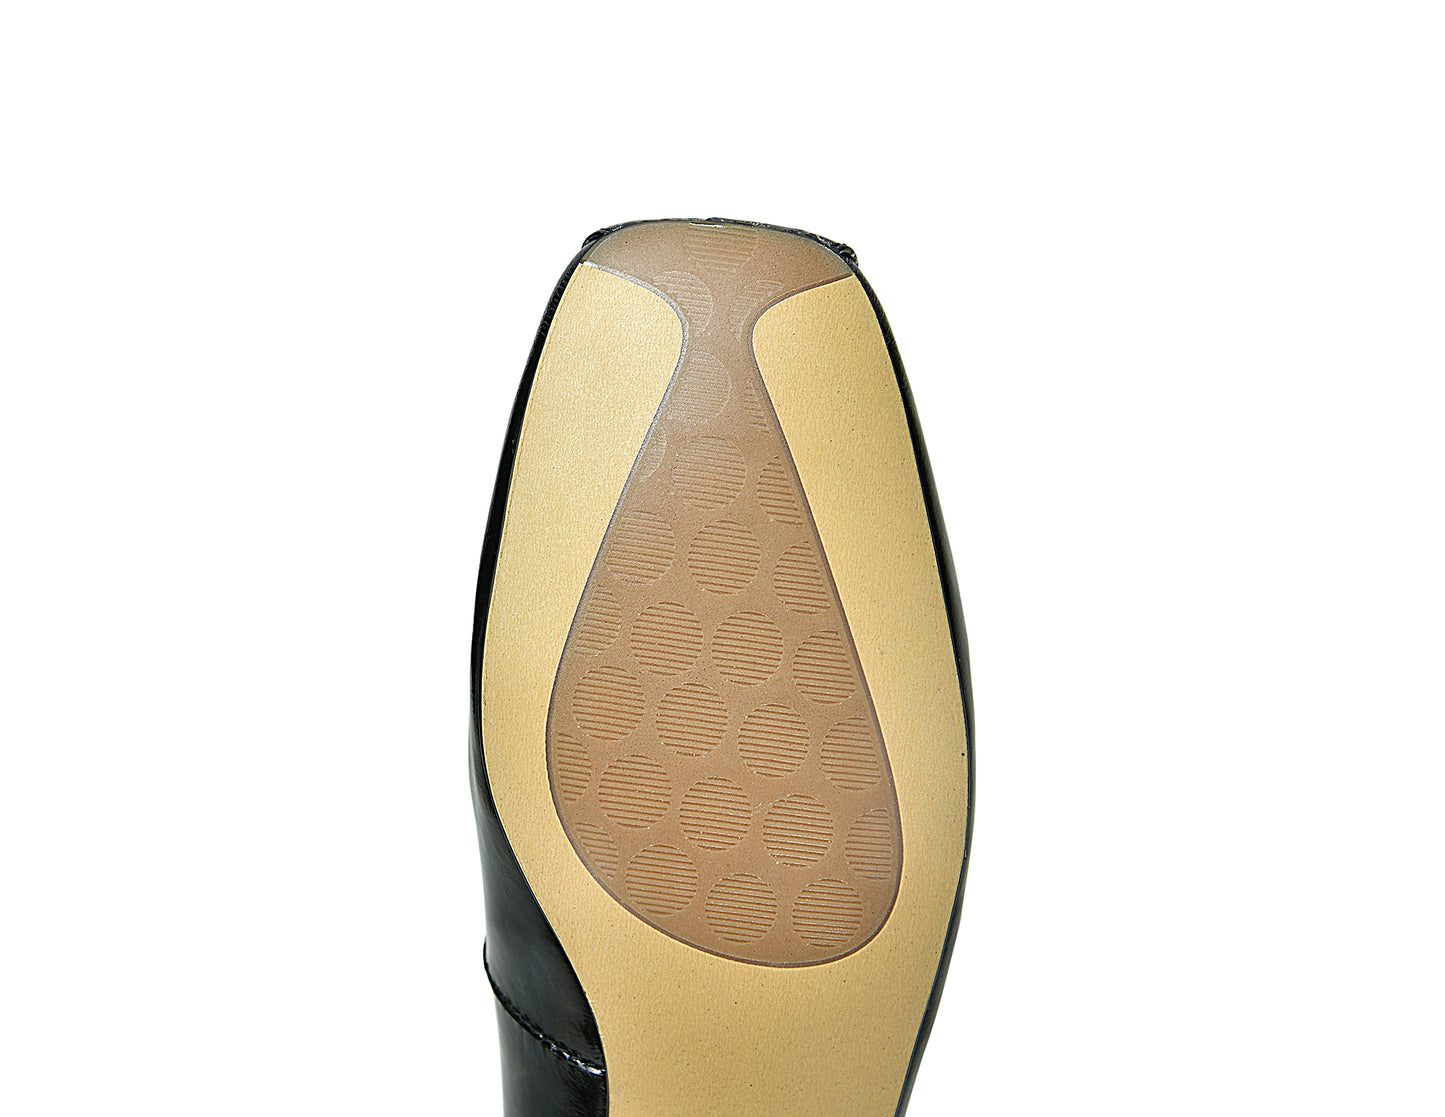 TinaCus Handmade Women's Genuine Leather Printed Snakeskin Slip On Mid Toe Mid Spool Heel Pumps Shoes